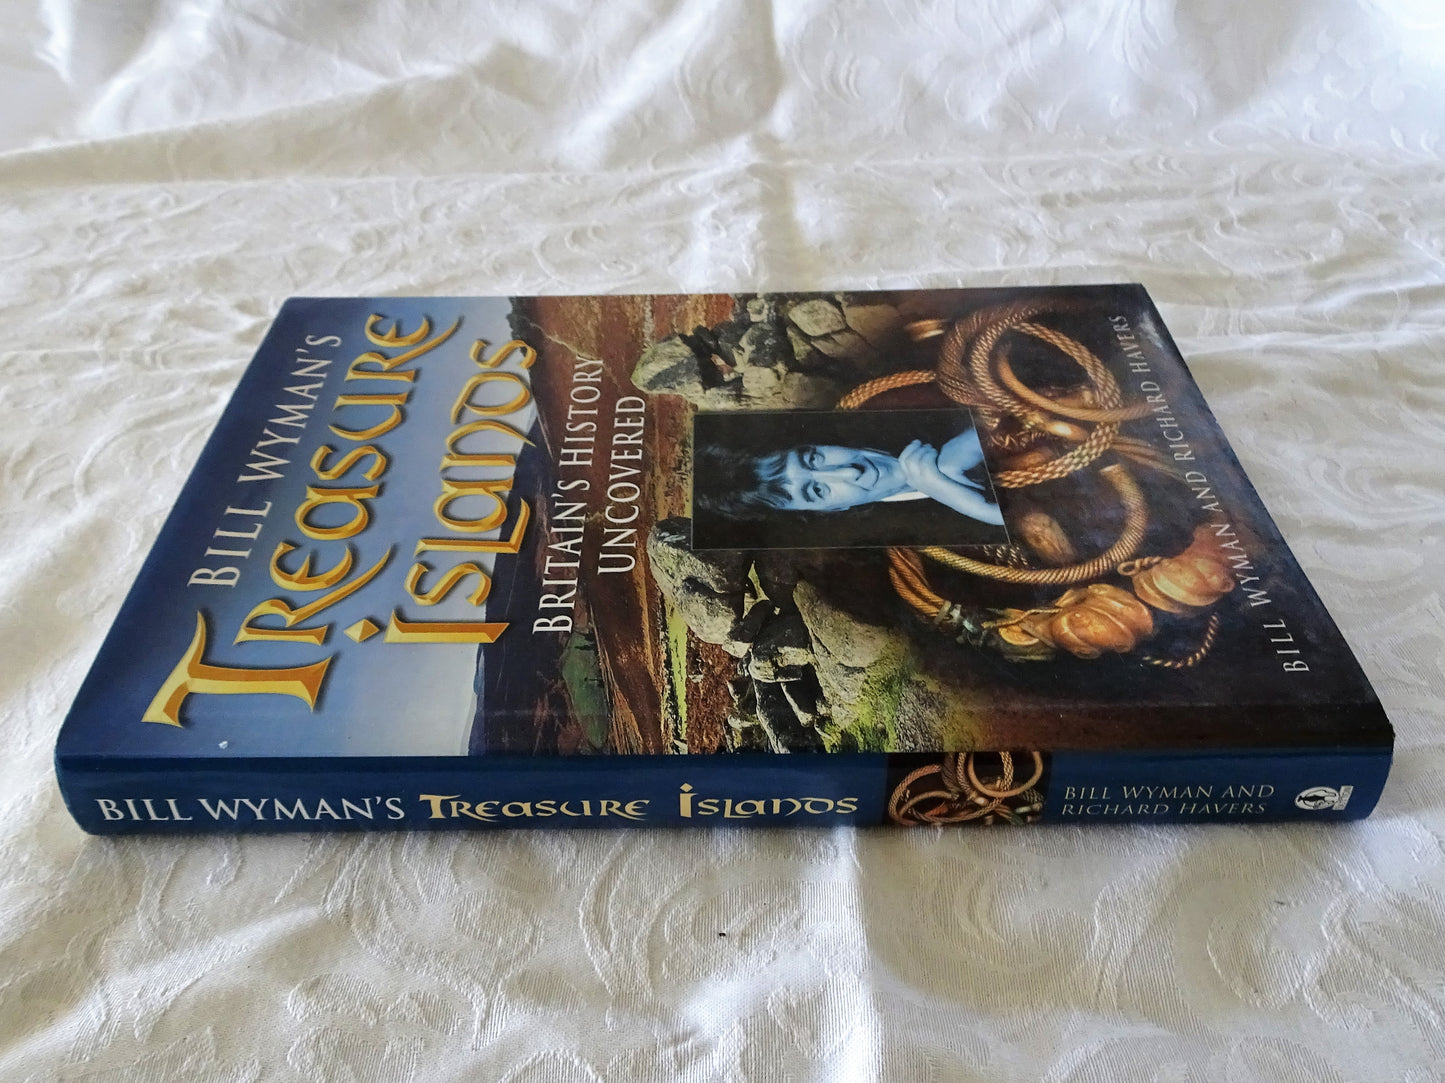 Bill Wyman's Treasure Islands by Bill Wyman and Richard Havers